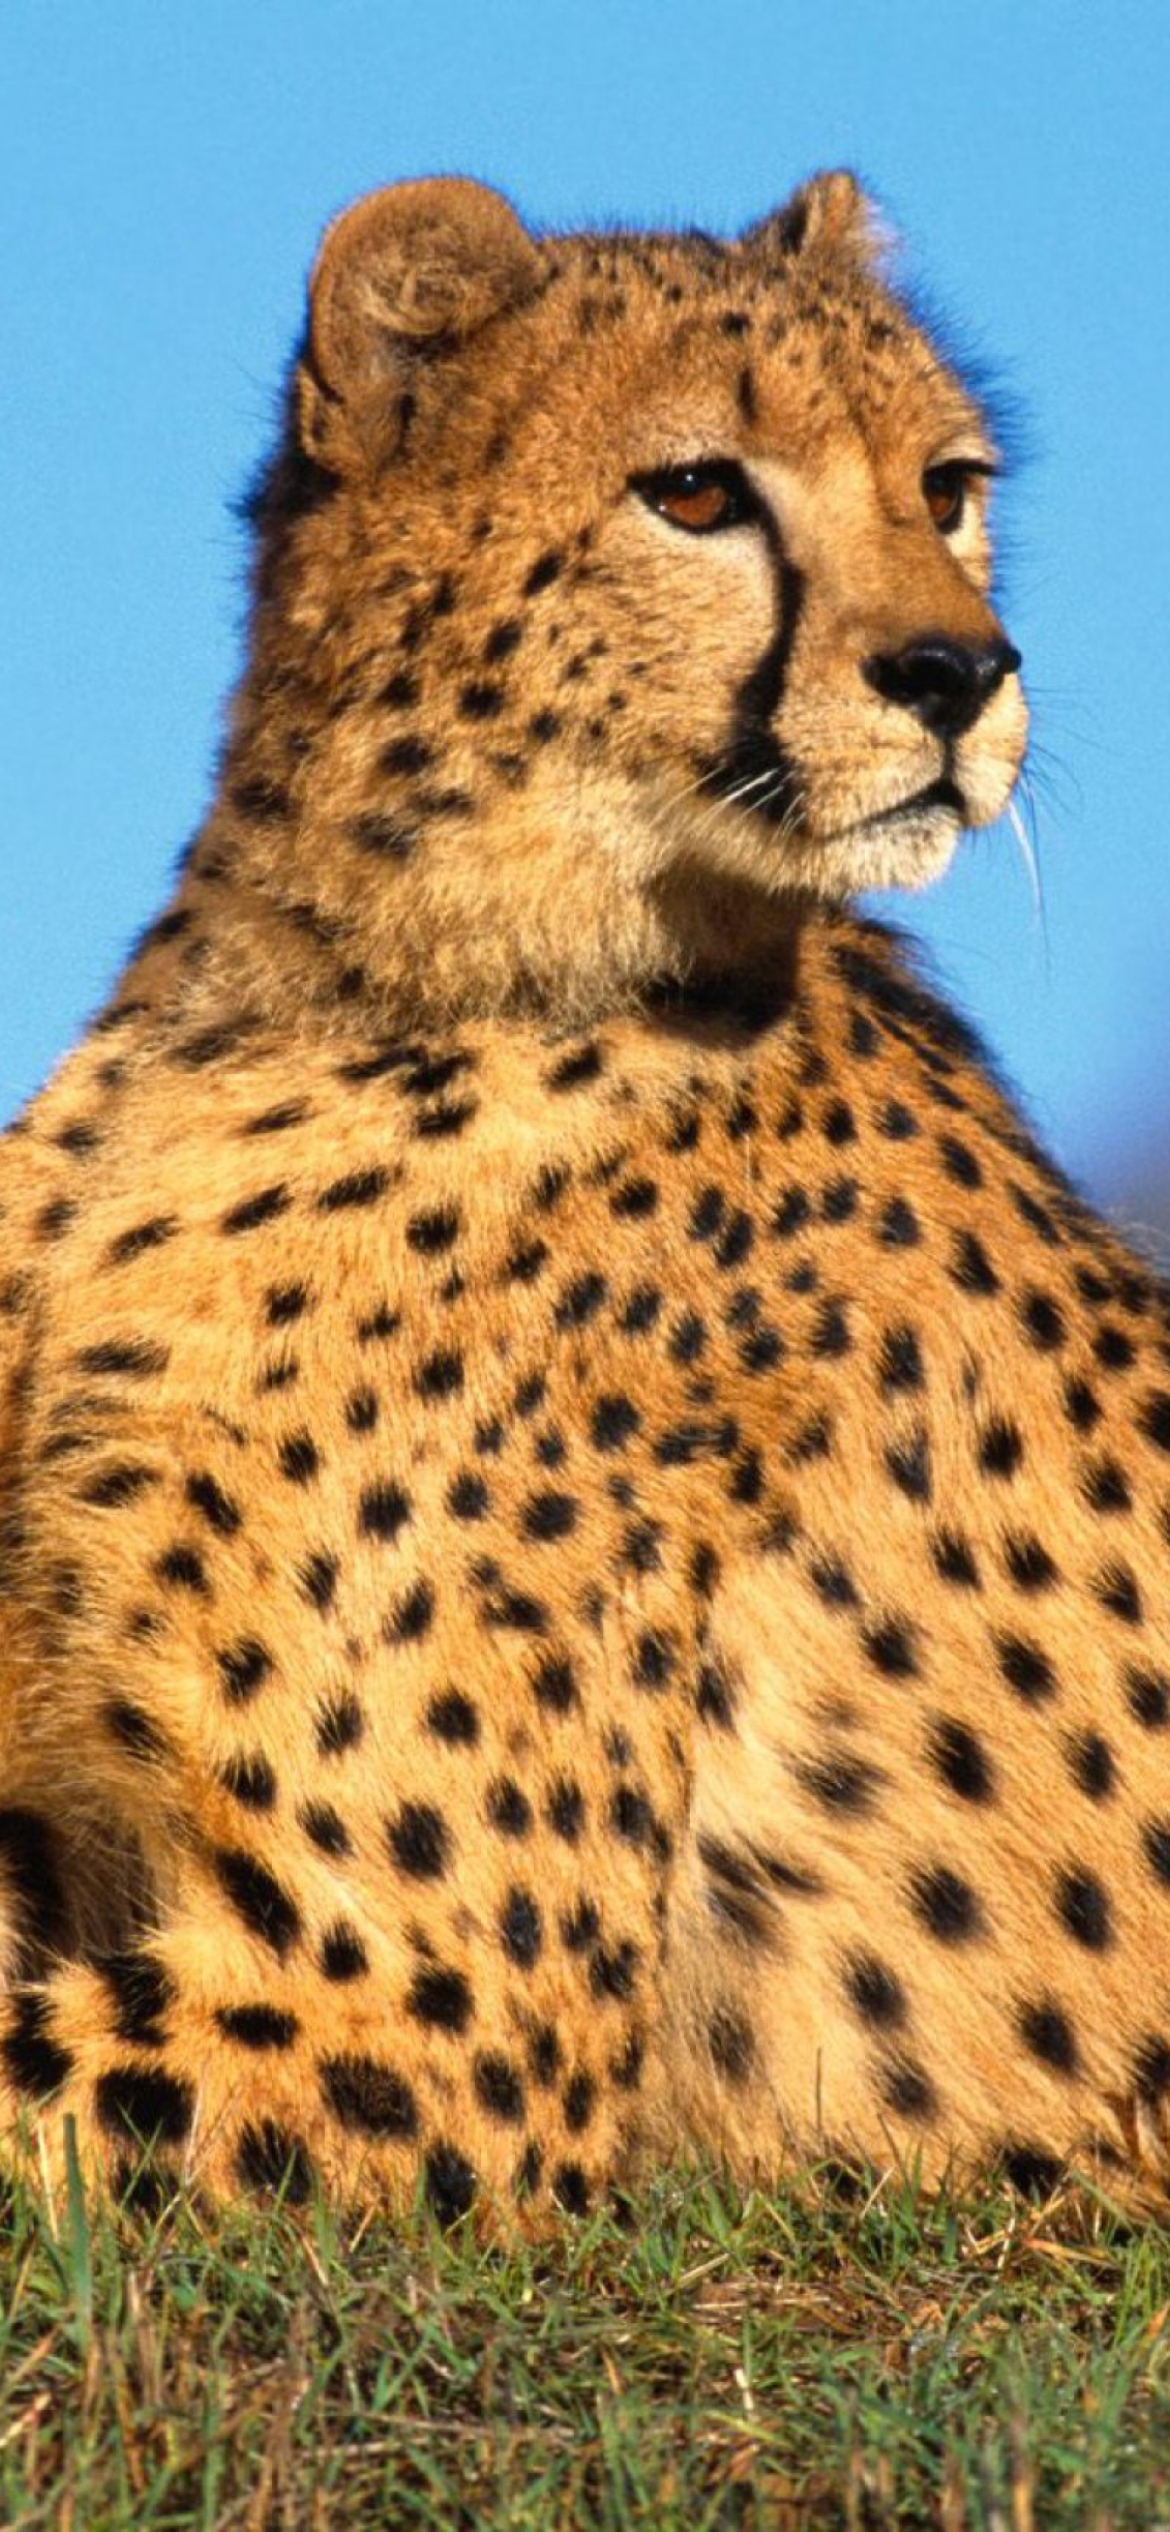 Fast Predator Cheetah wallpaper 1170x2532